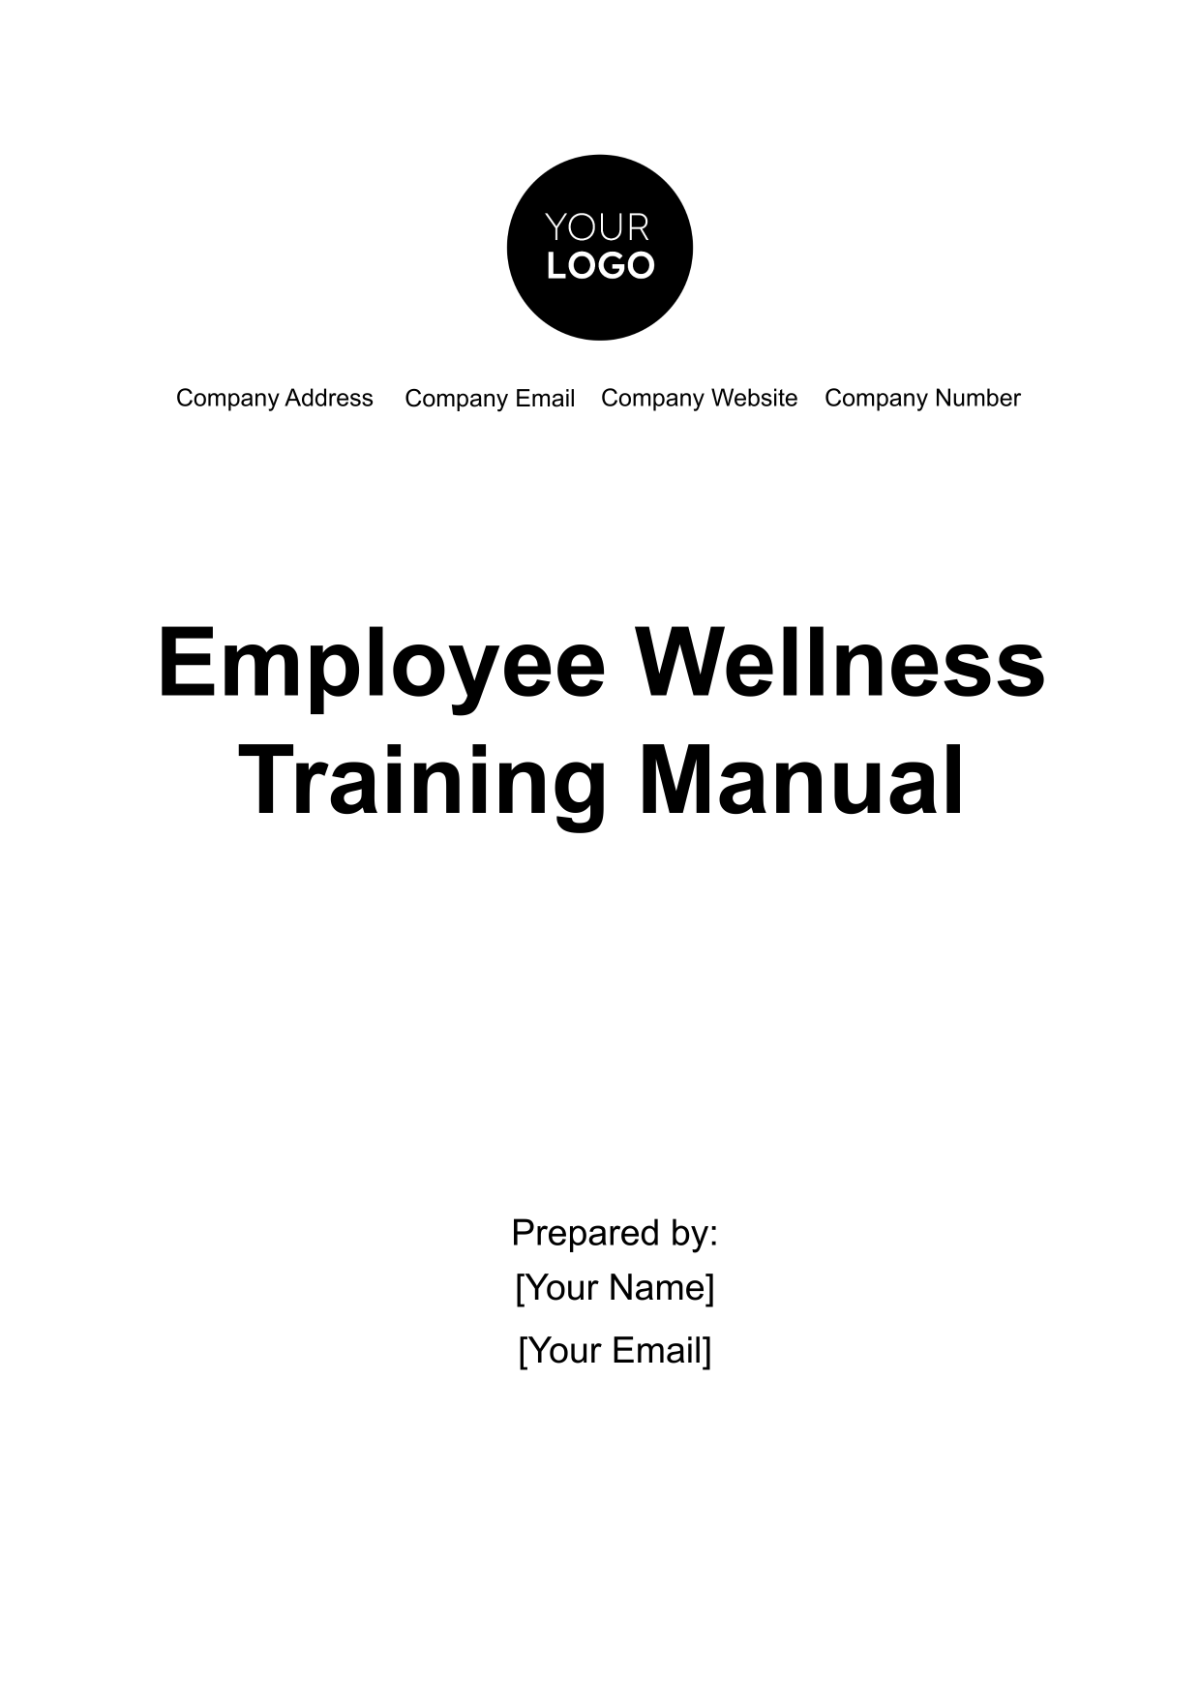 Free Employee Wellness Training Manual Template